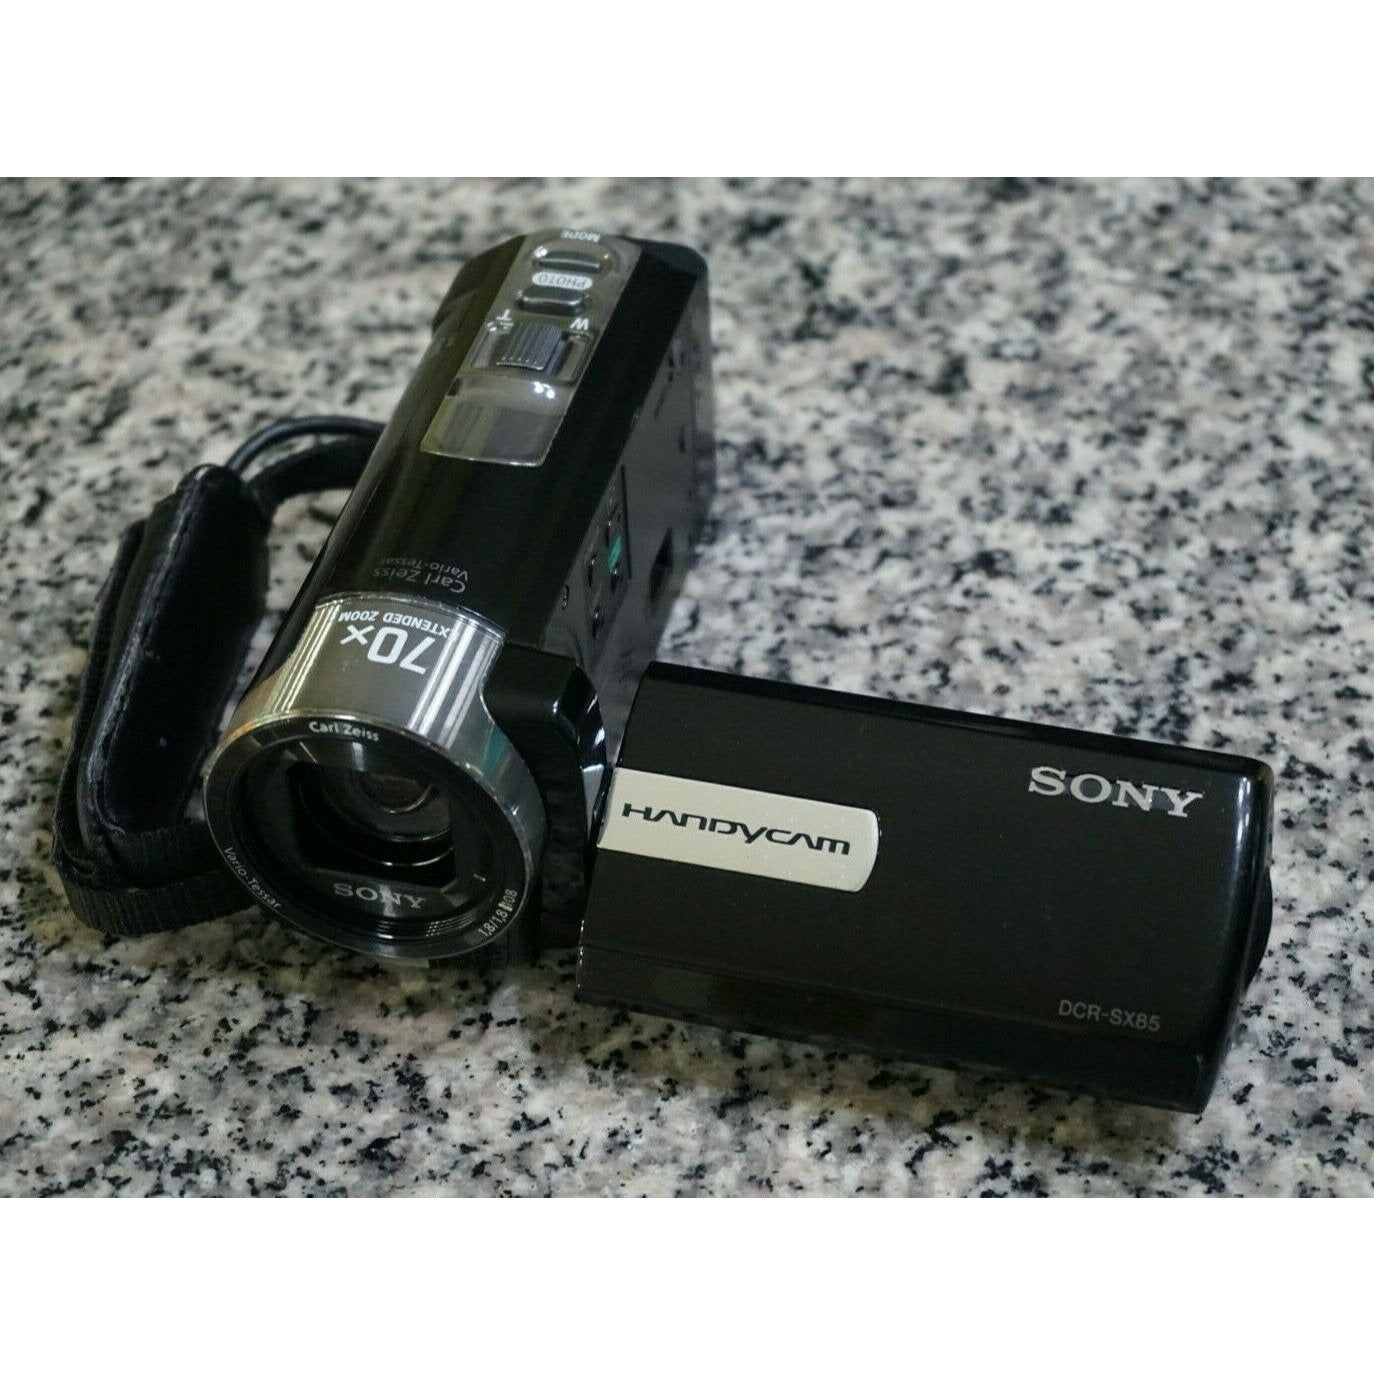 Sony DCR-SX85 480p Handycam Flash Camcorder Black 60x